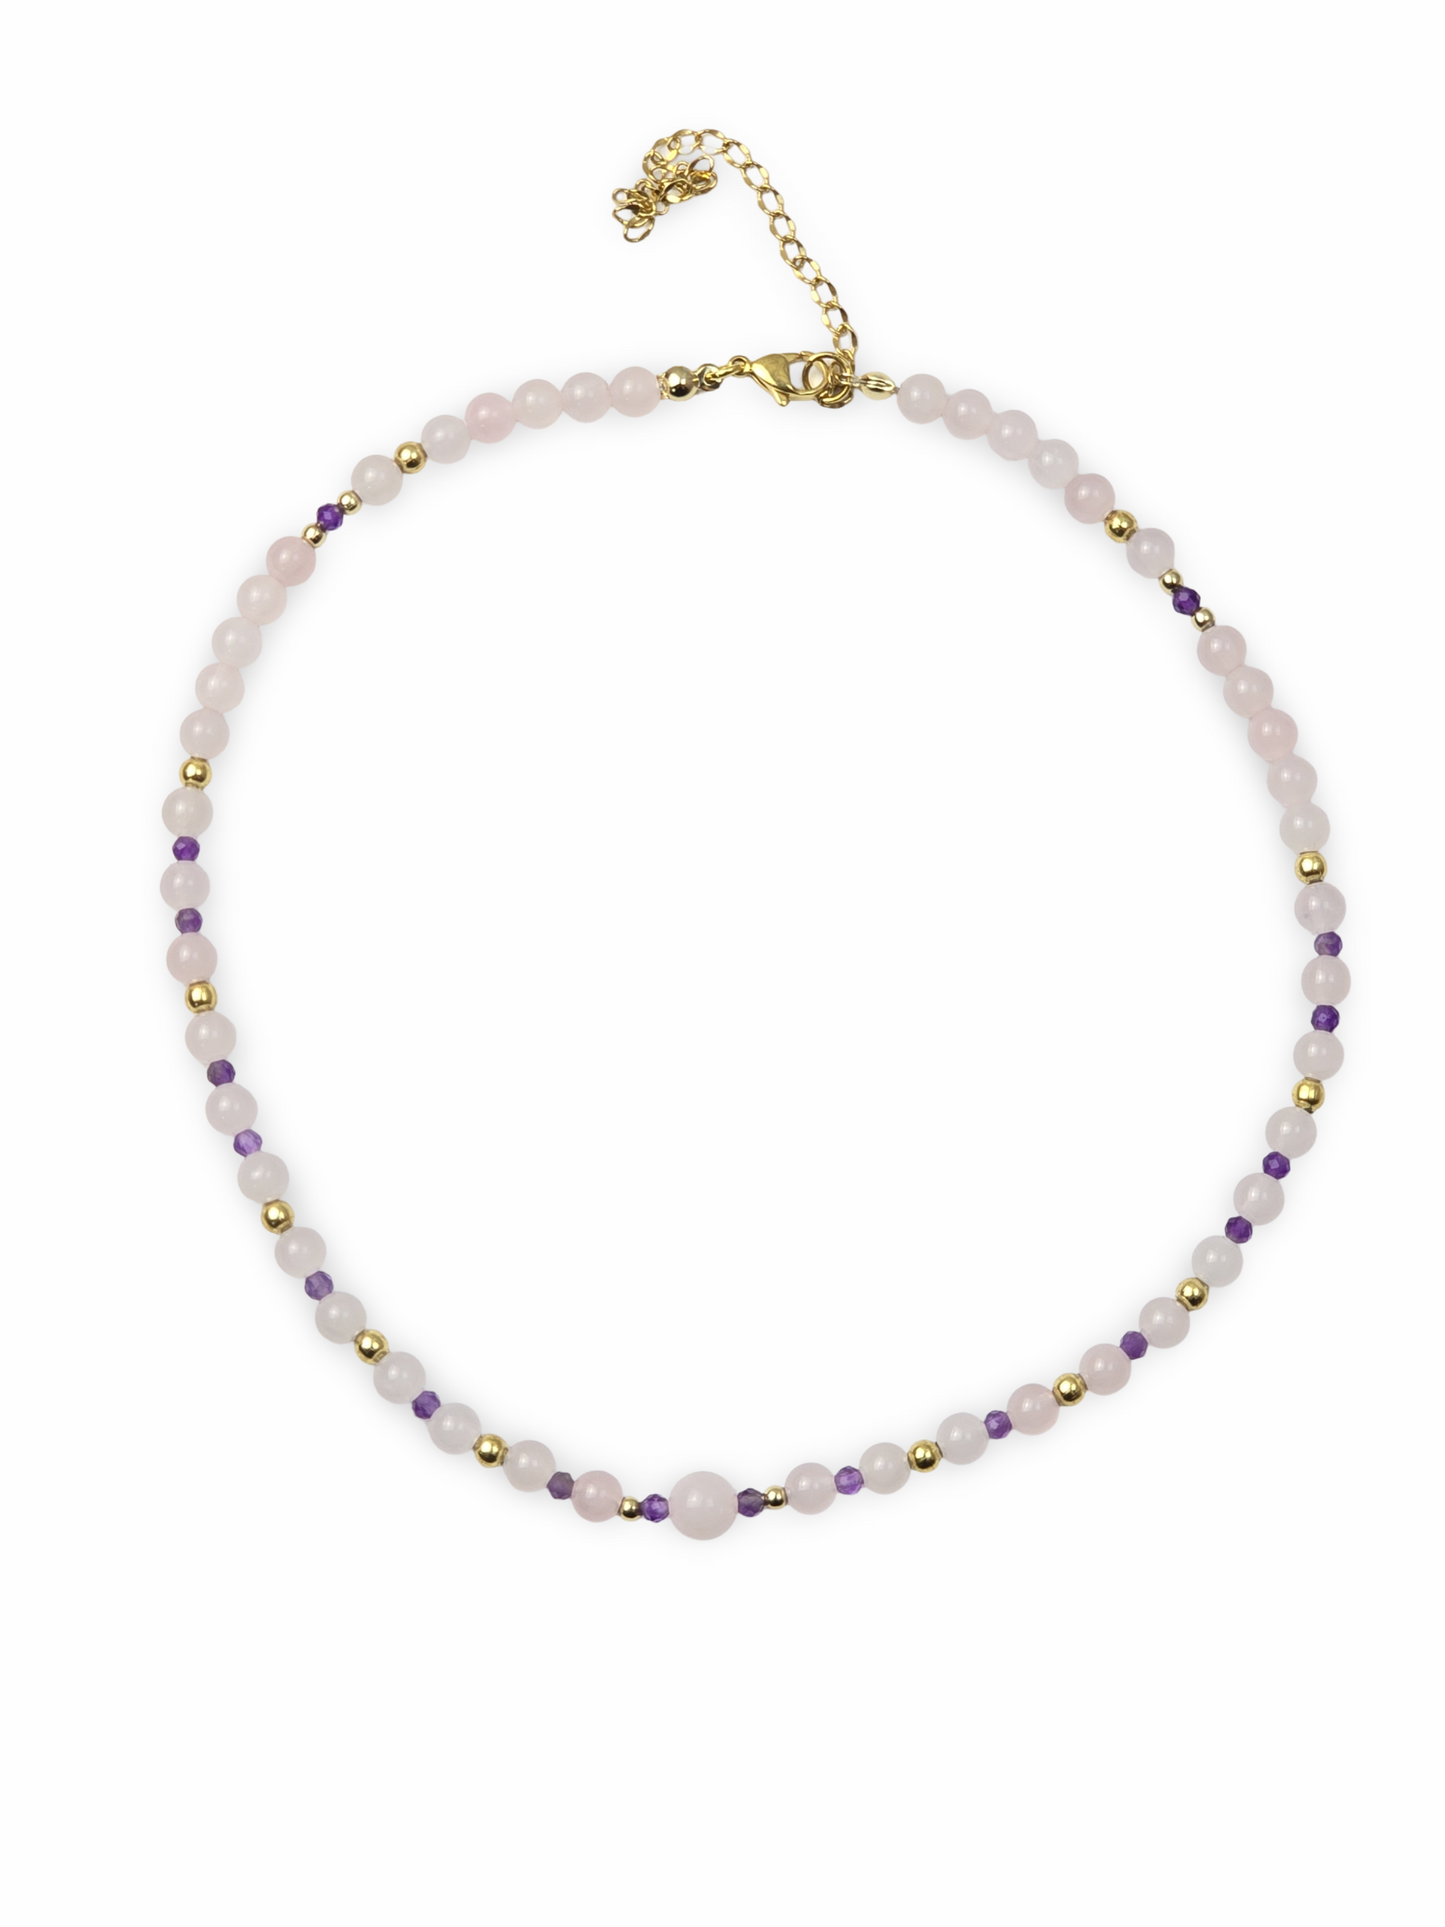 Harmony Choker: Amethyst and Rose Quartz Beads